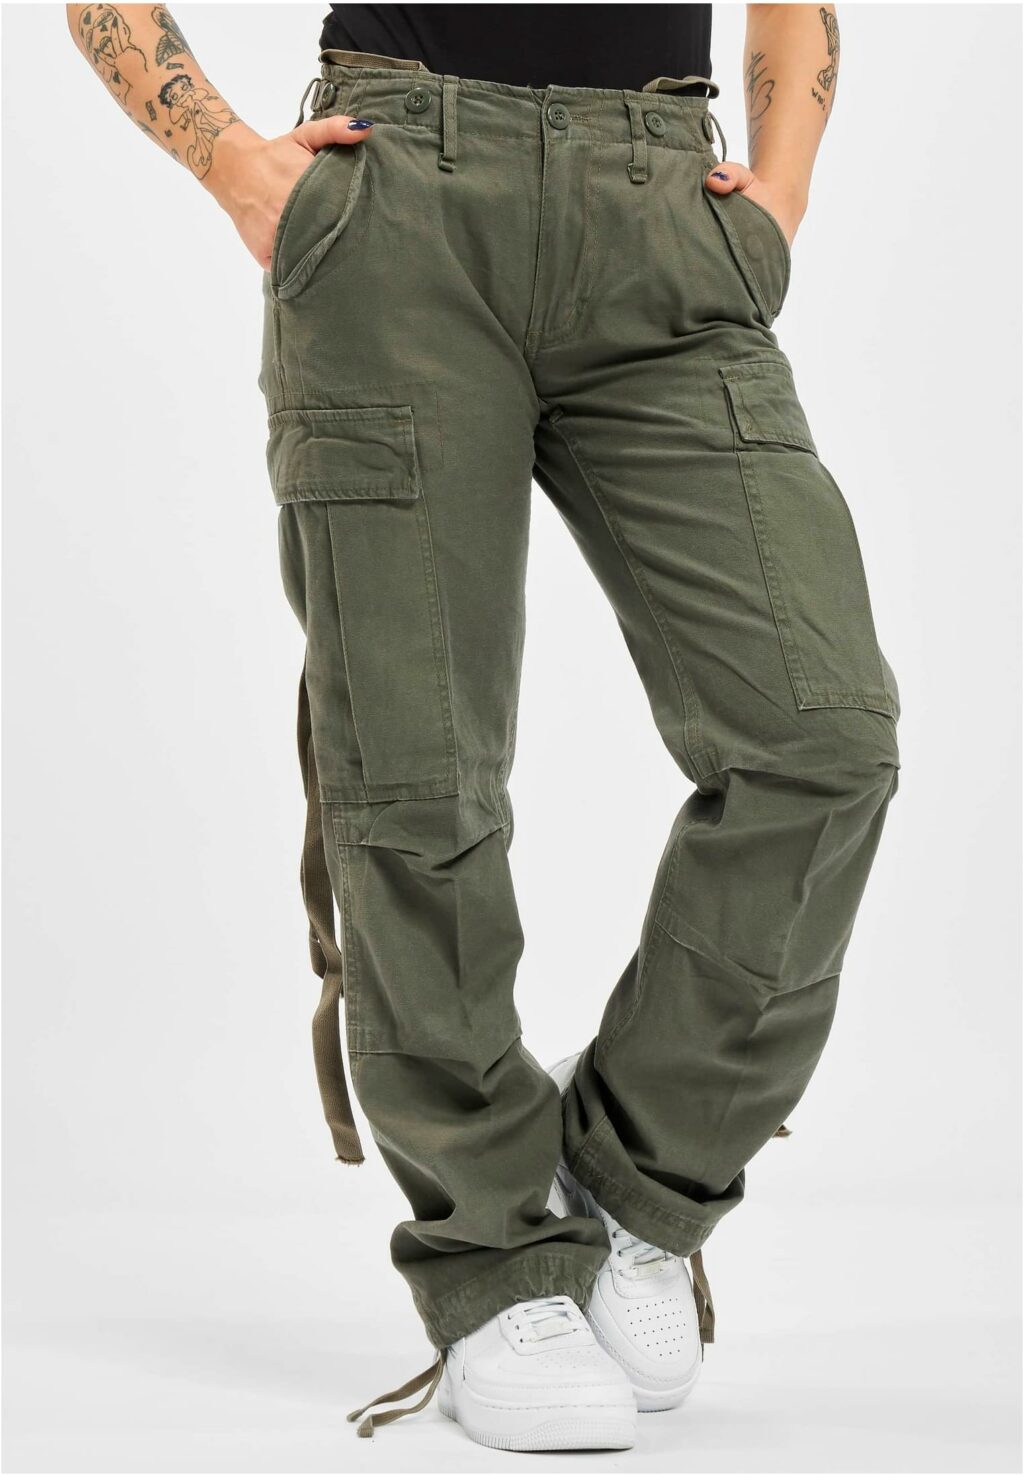 Brandit Ladies M-65 Cargo Pants olive BD11001